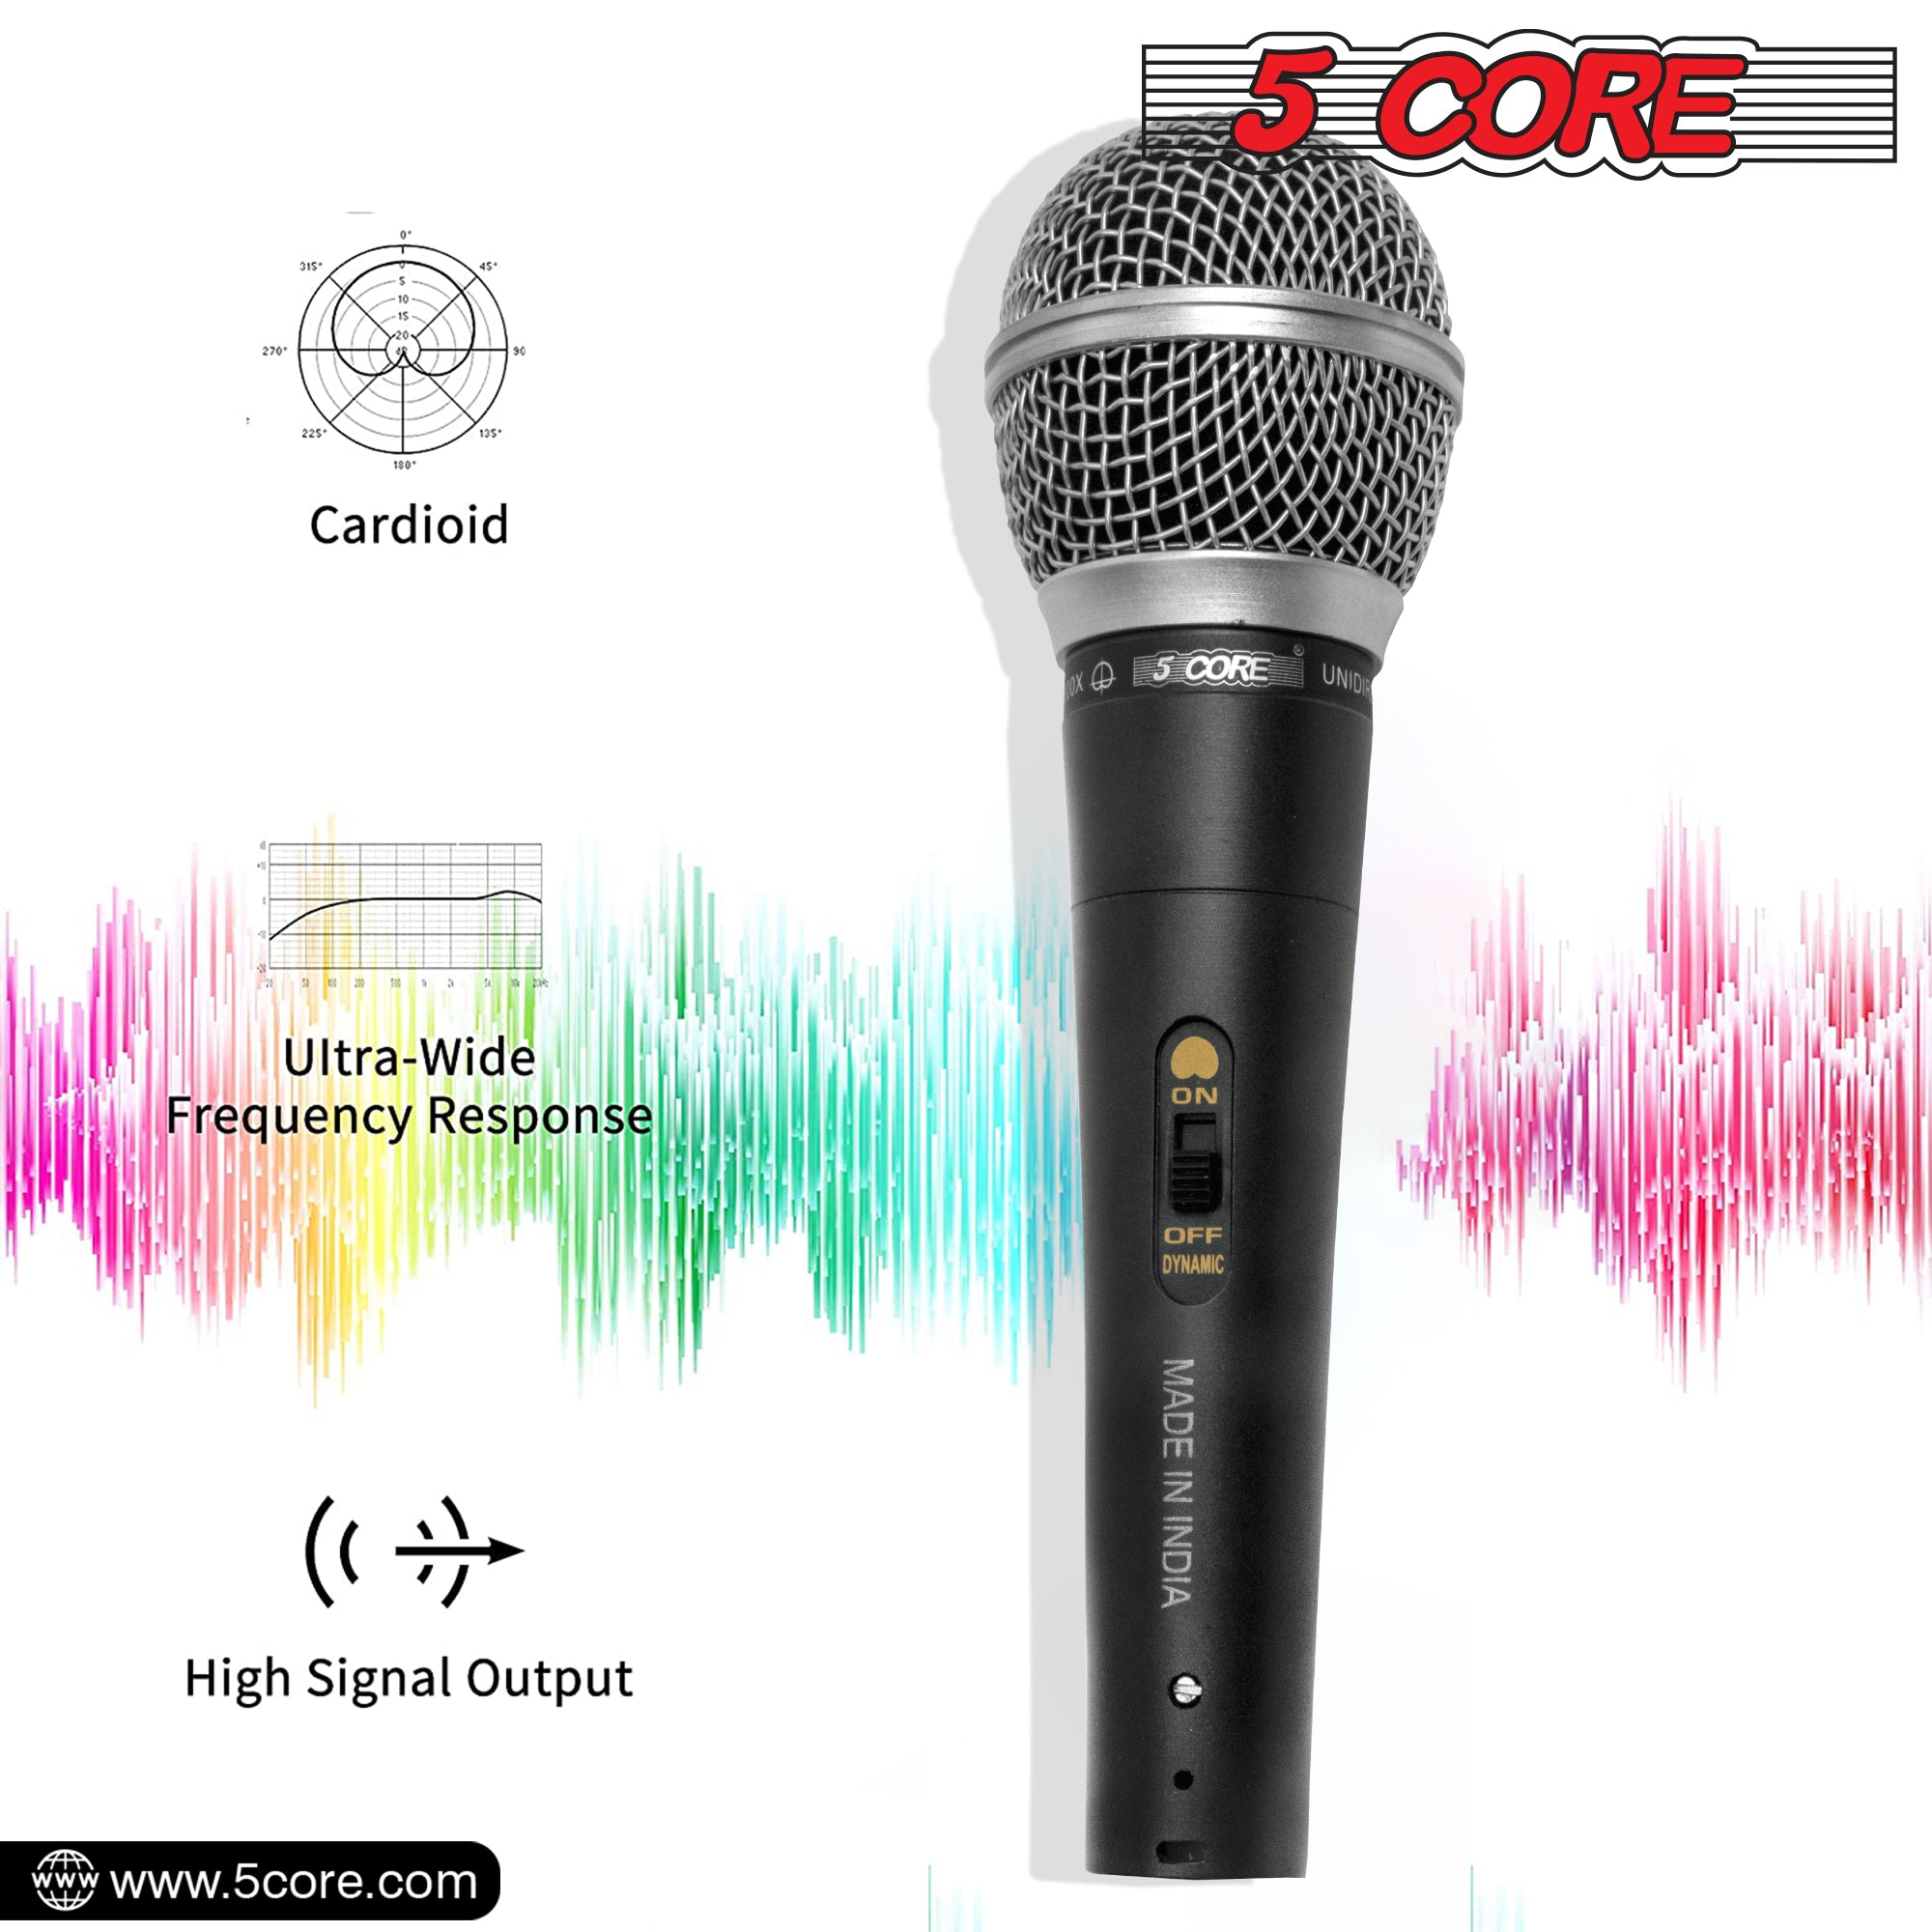 Professional-grade karaoke microphone.